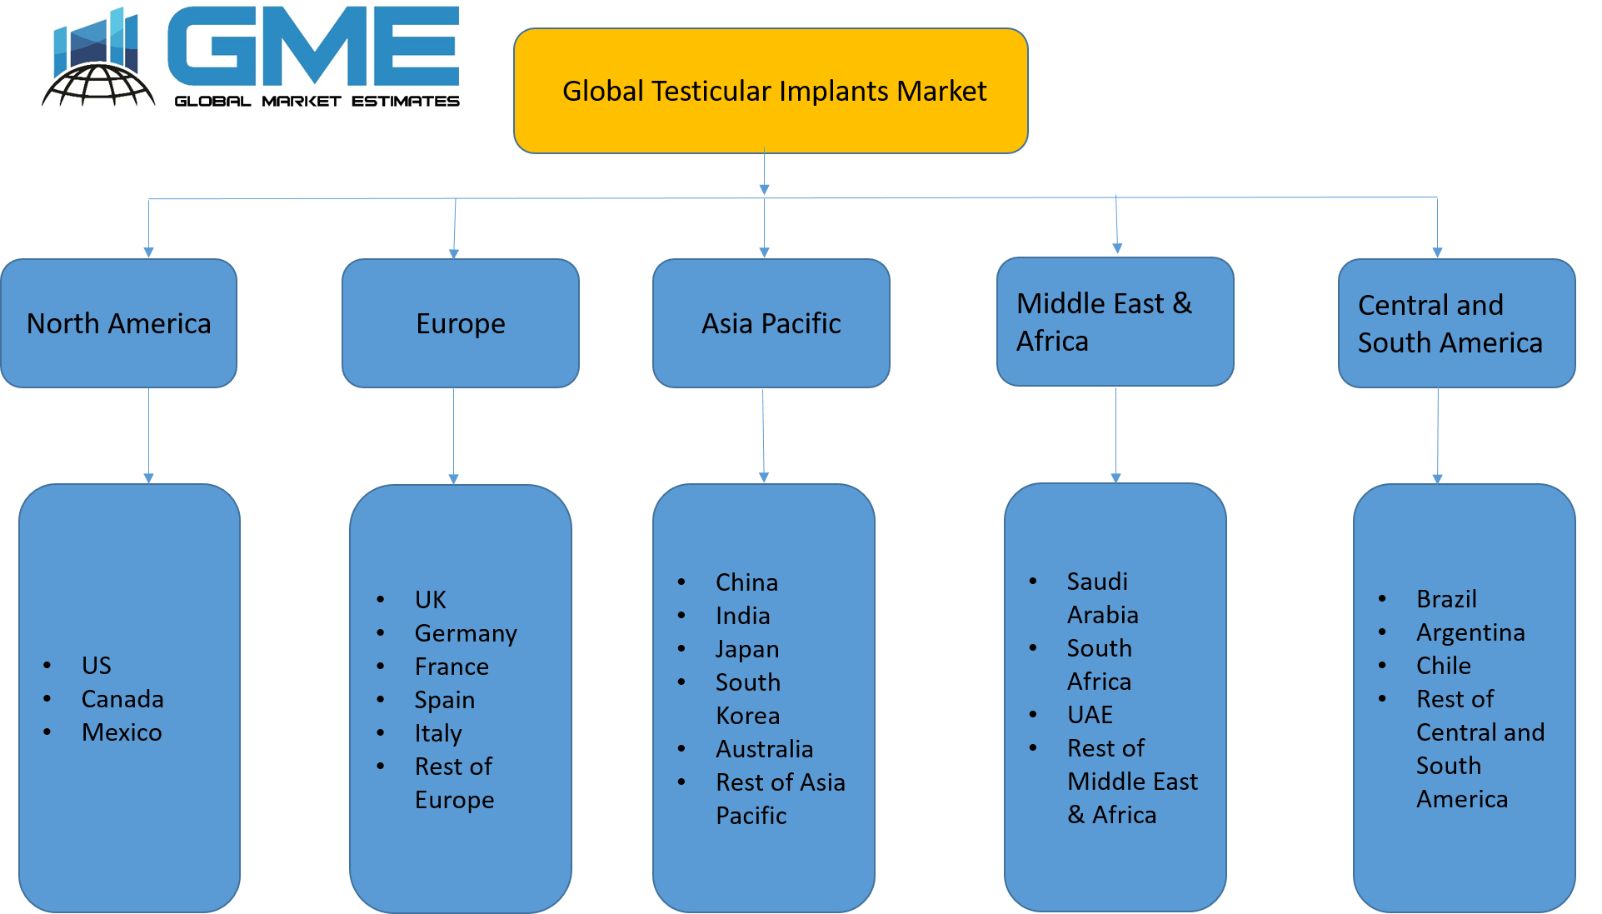 Global Testicular Implants Market - Regional Analysis